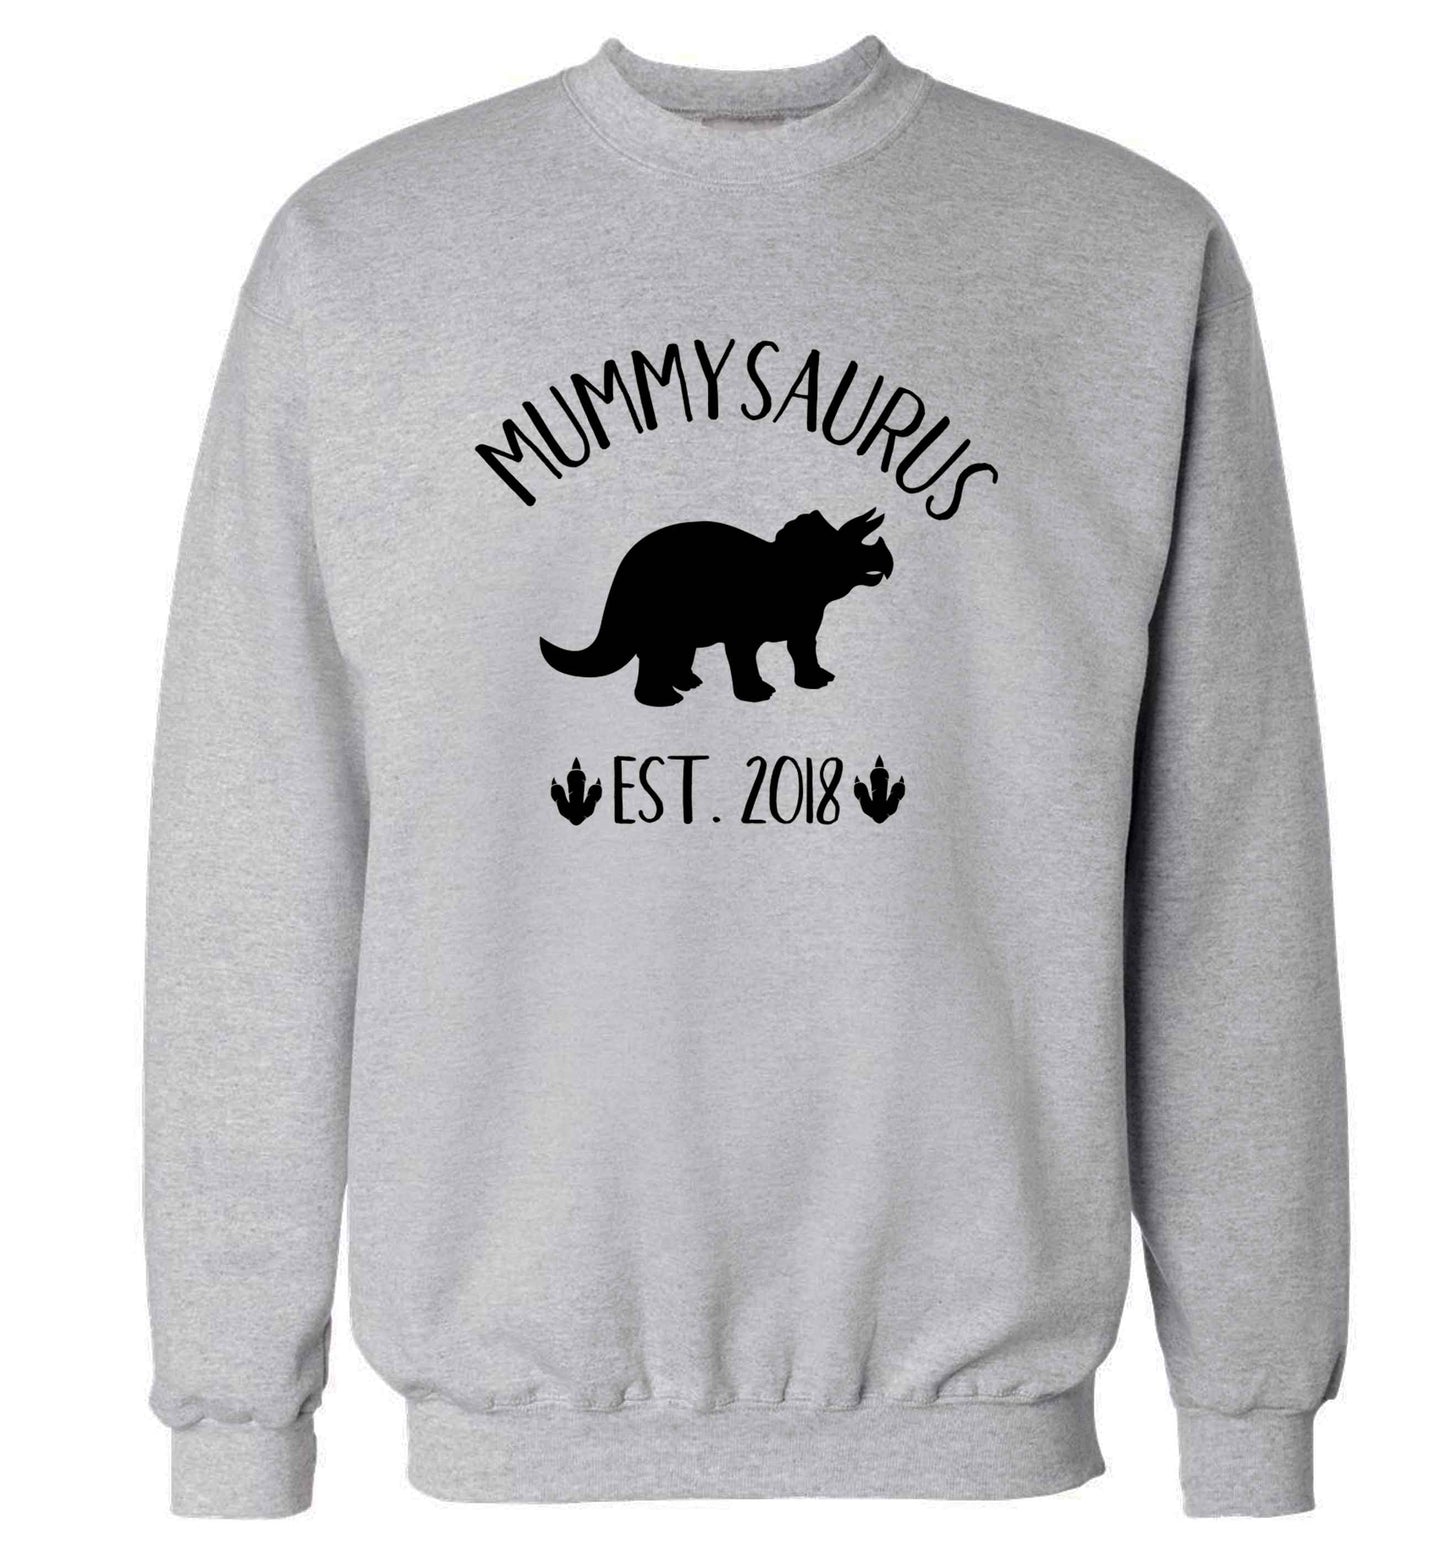 Personalised mummysaurus date adult's unisex grey sweater 2XL